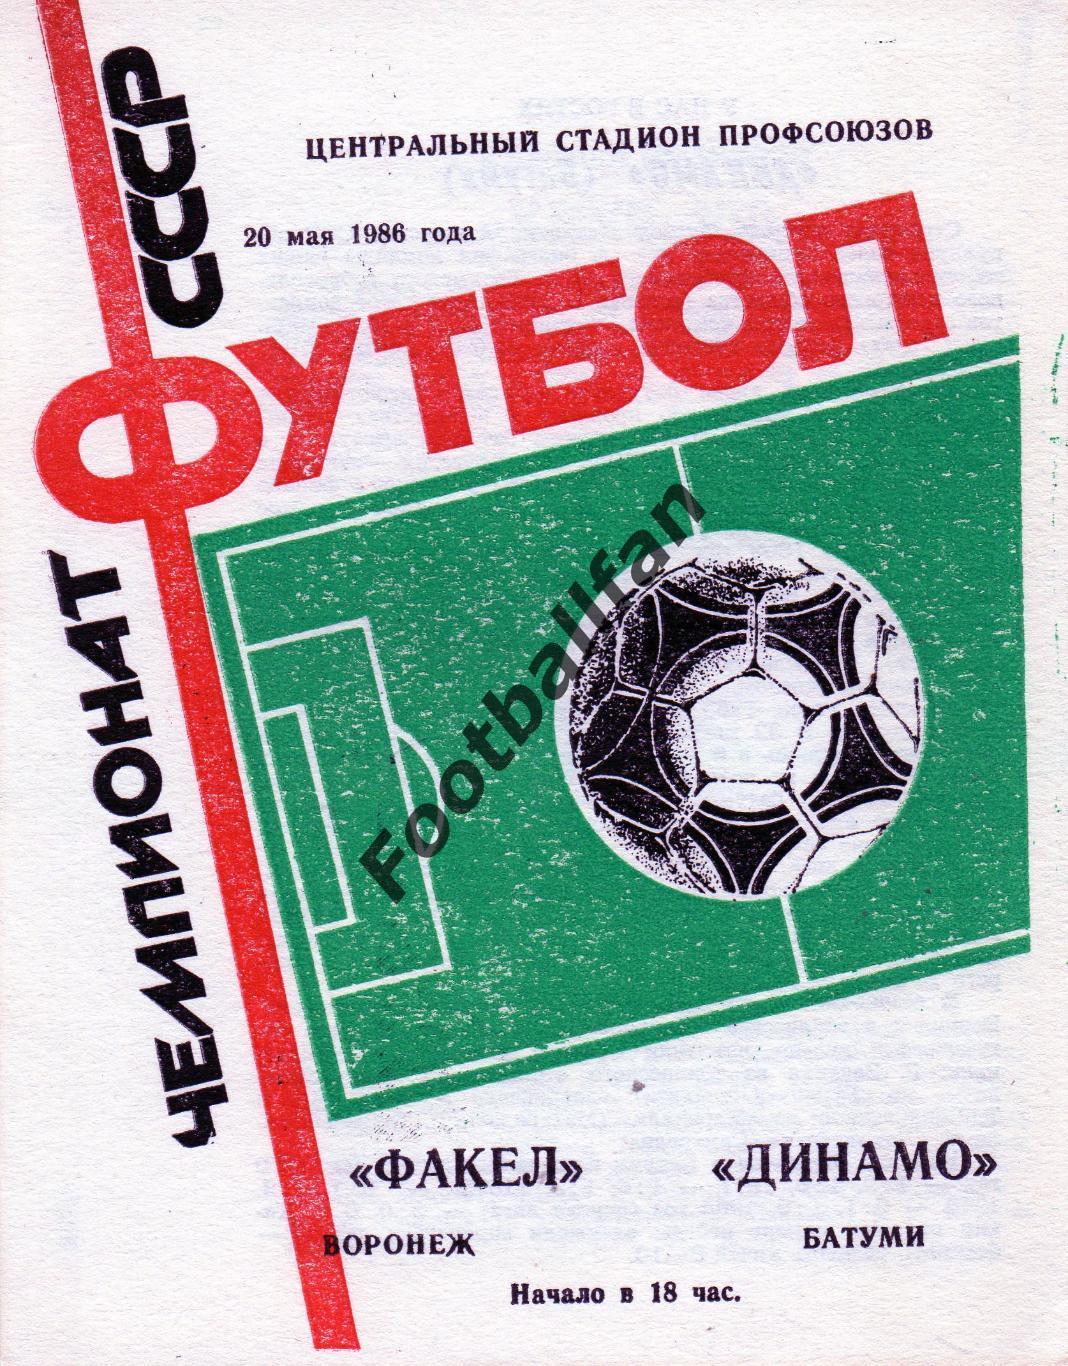 Факел Воронеж - Динамо Батуми 20.05.1986